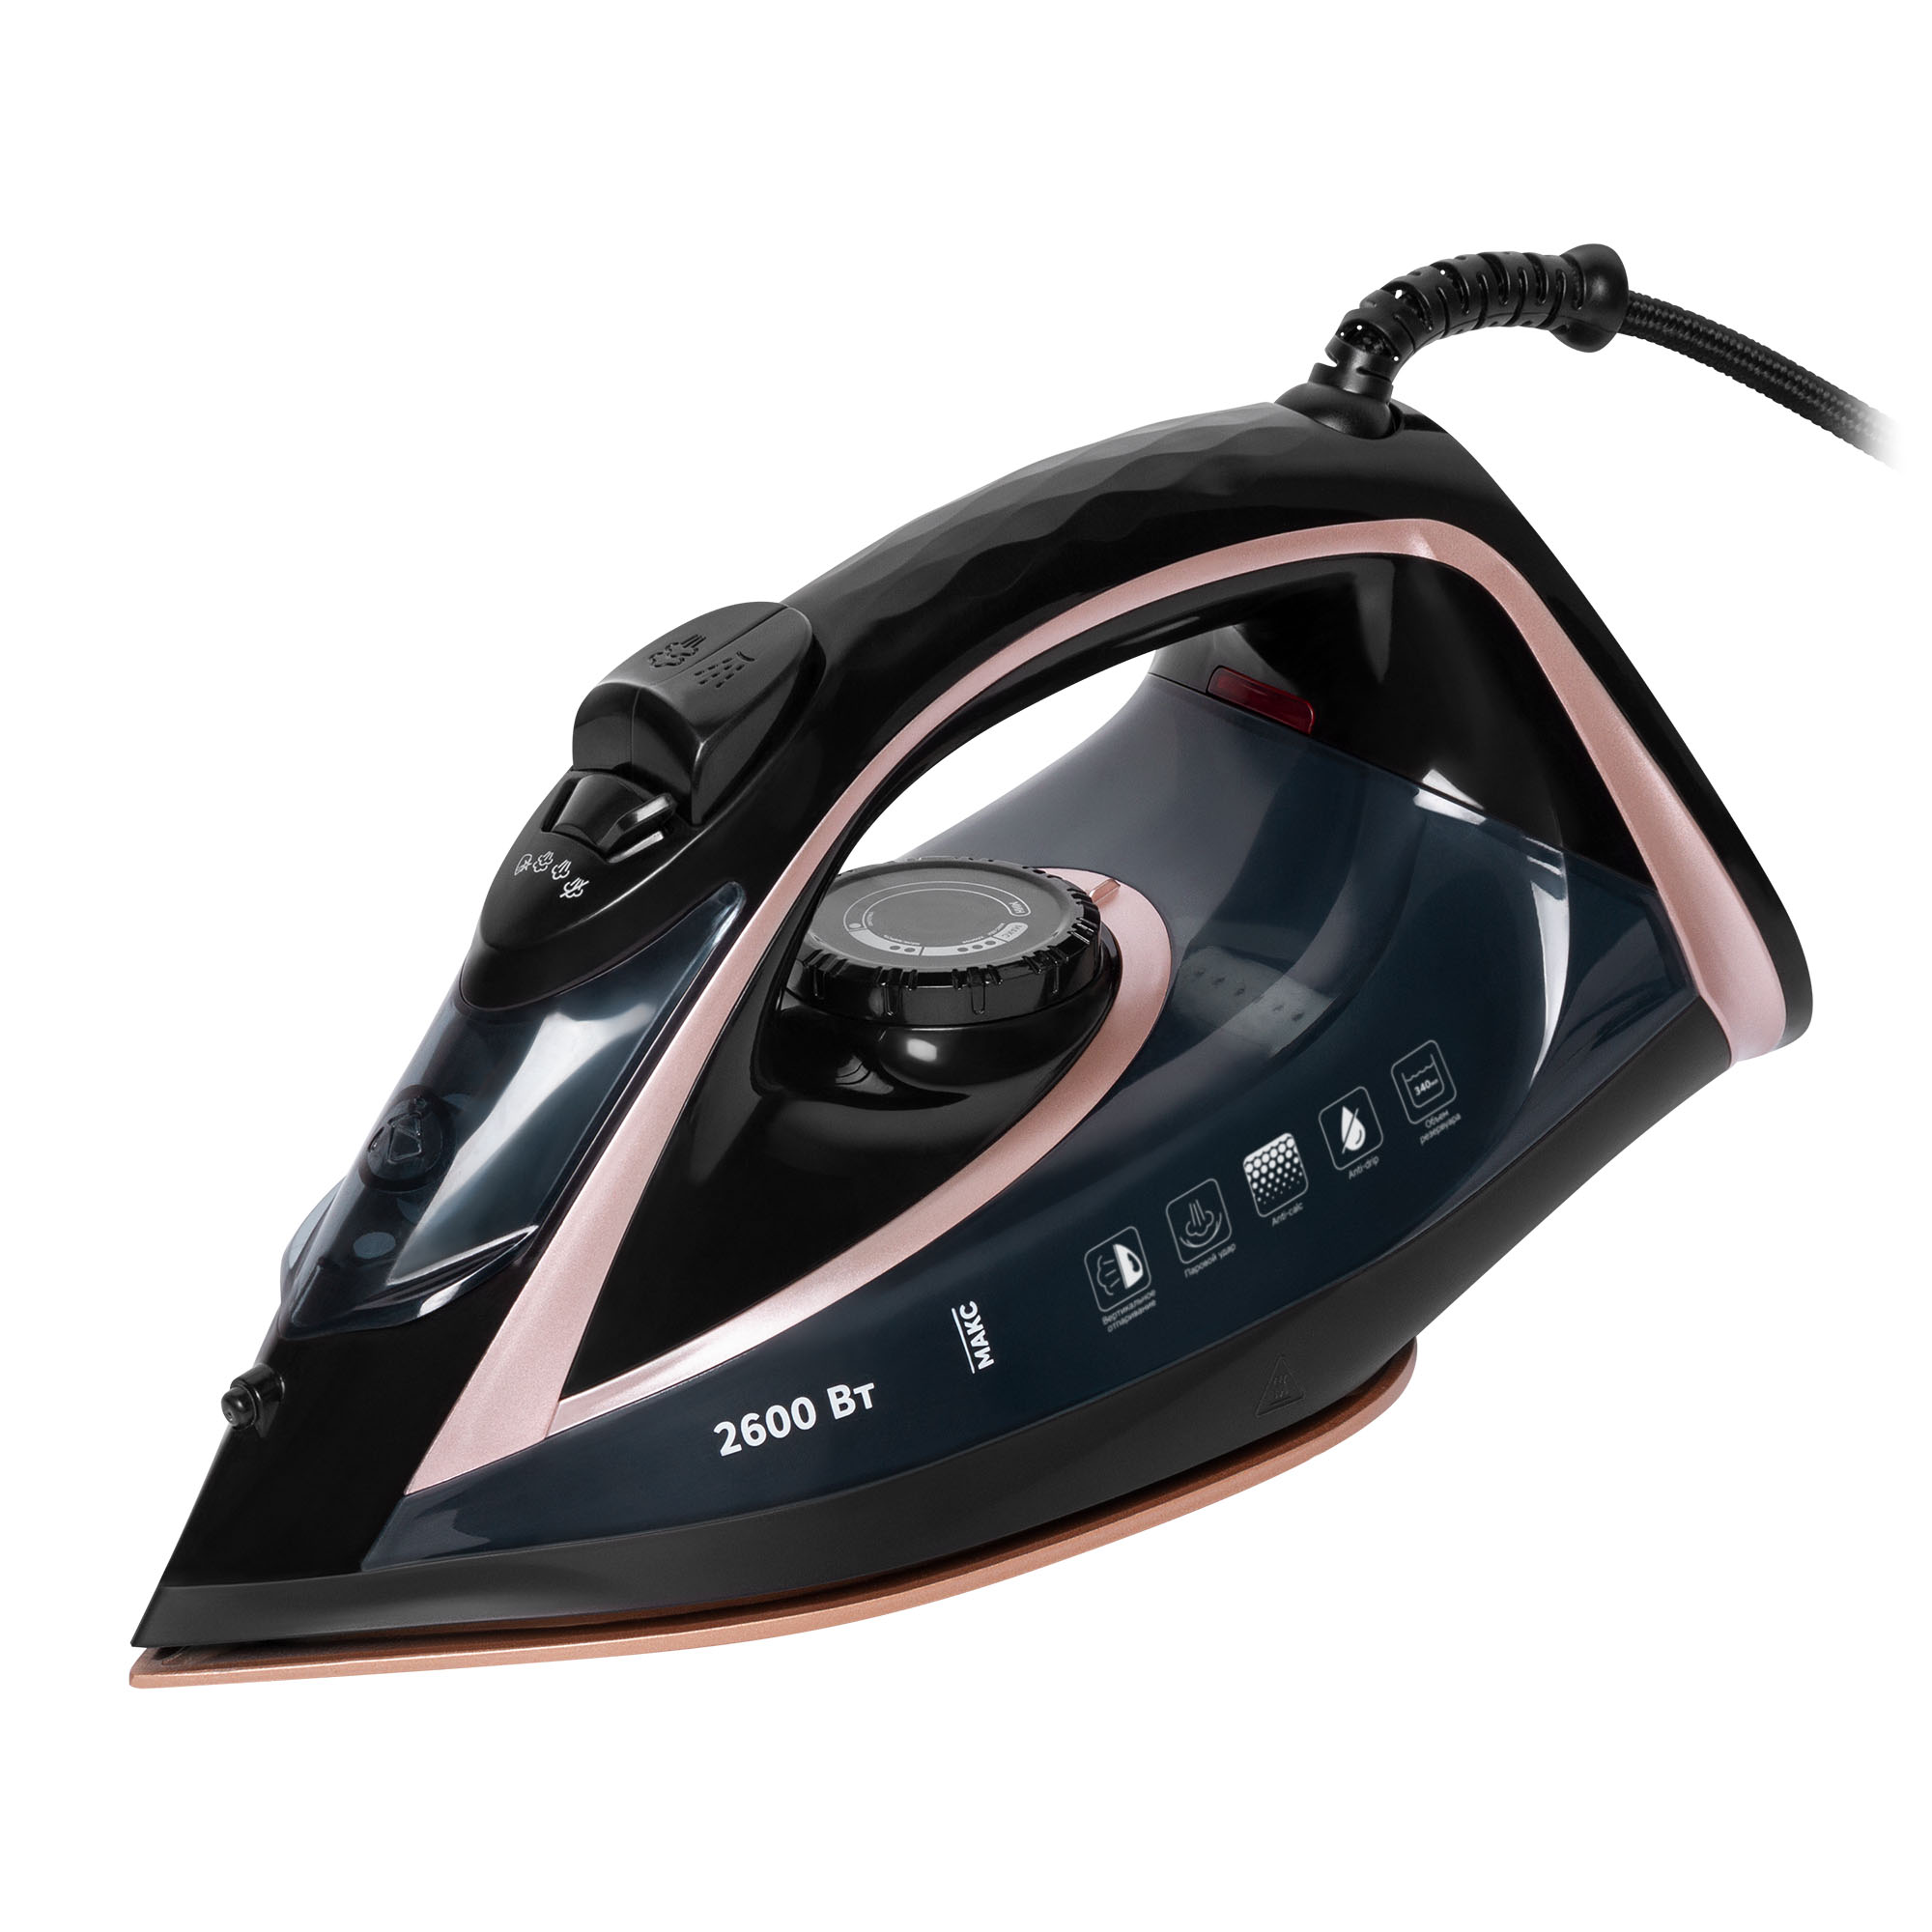 Утюг Rombica myHome IRN-003 розовый, черный утюг turbo pro anti calc fv5697e0